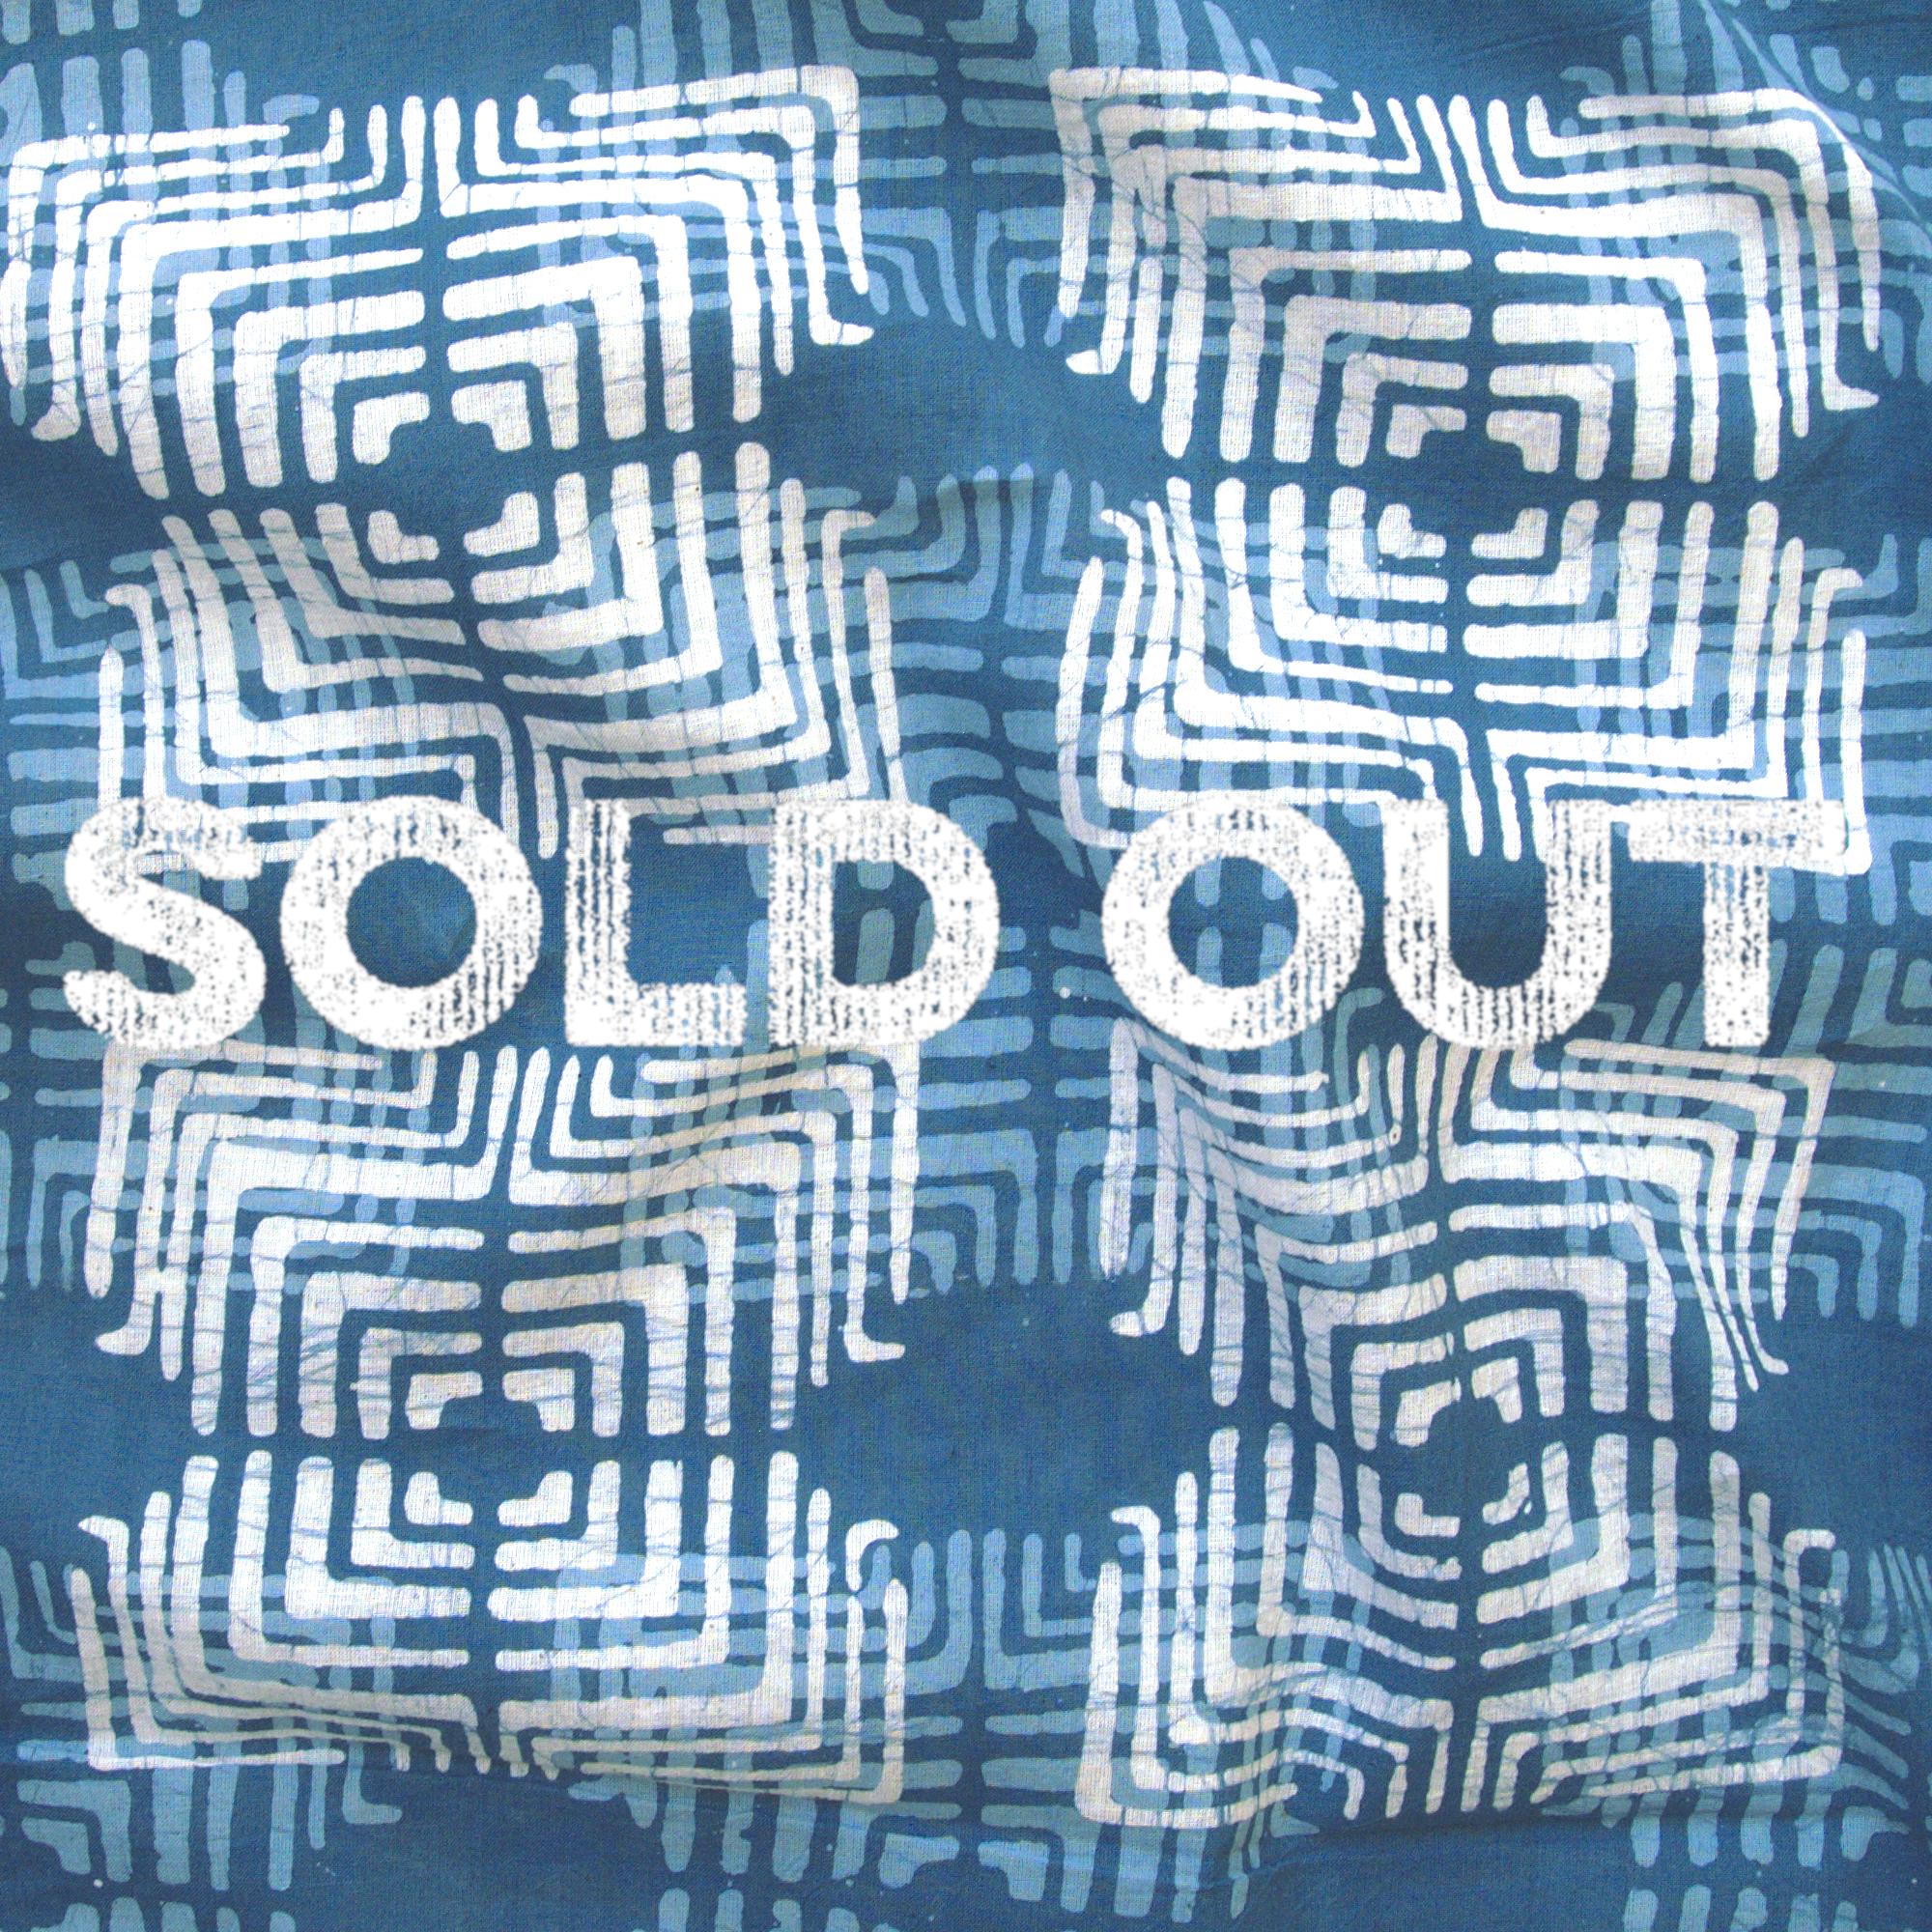 1 - SHA11 - 100% Block-Printed Batik Cotton Fabric From India - Batik - Blue Mirage - Contrast